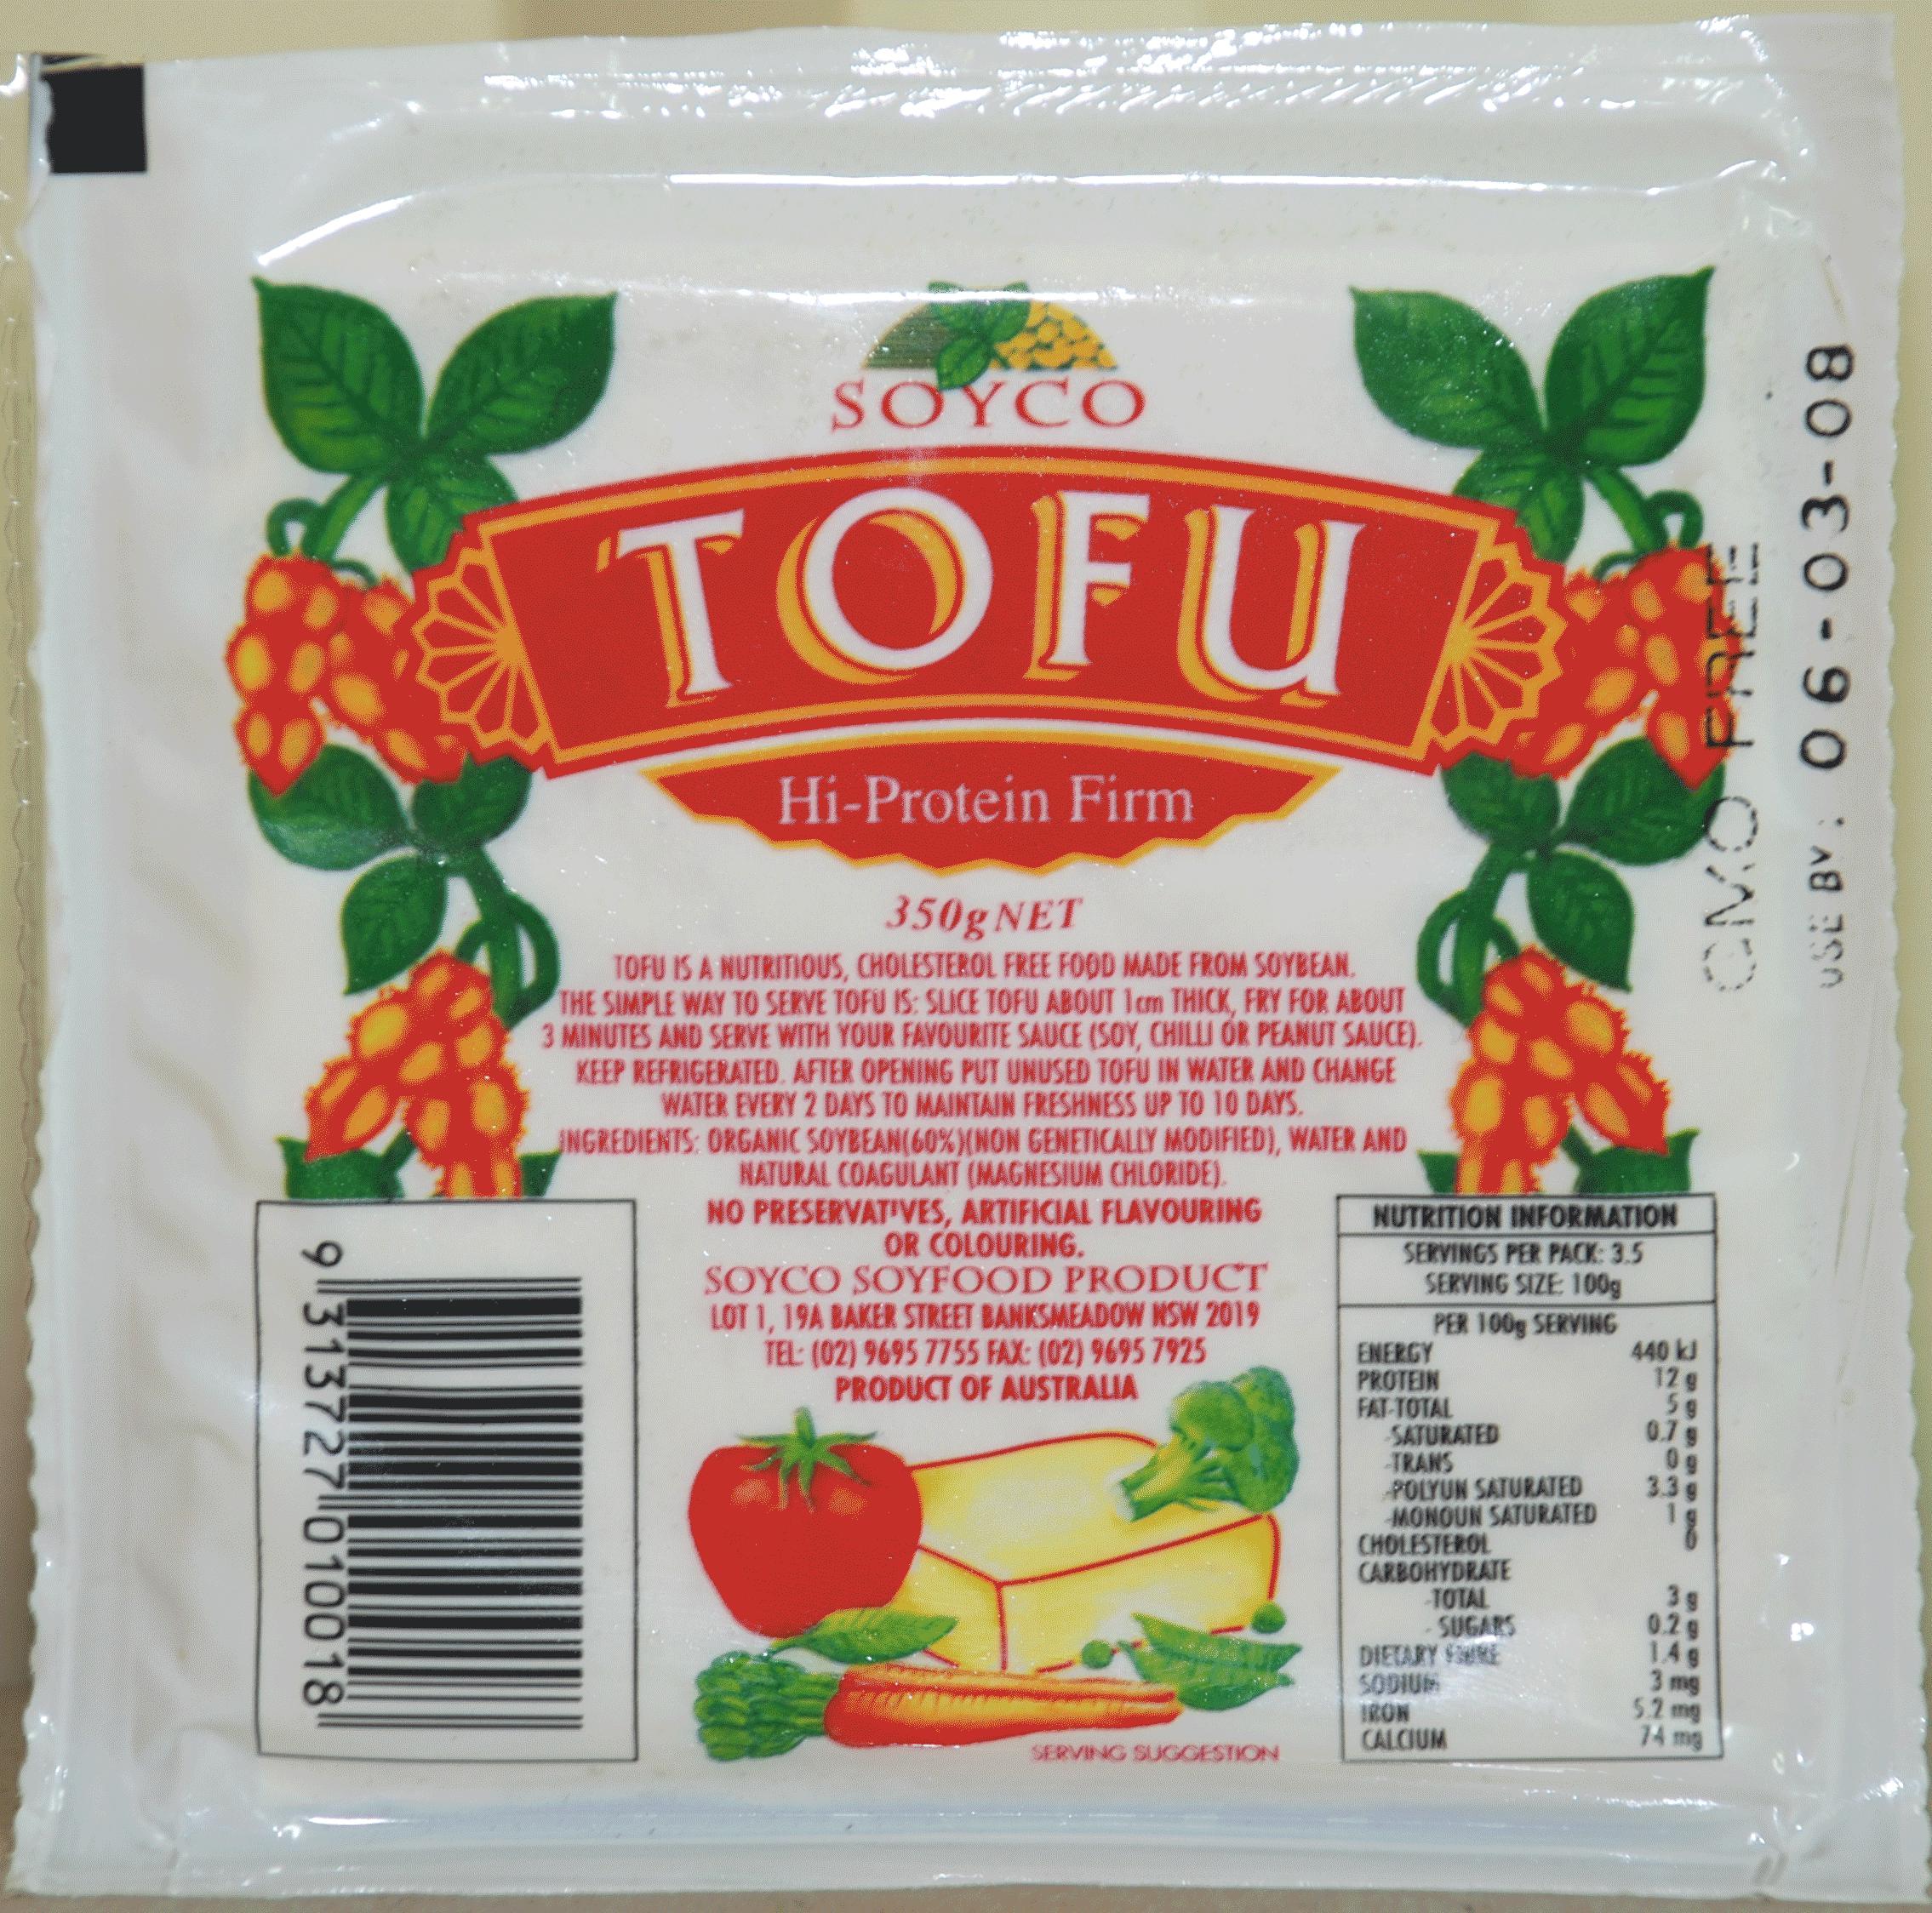 soyco hi protein firm tofu